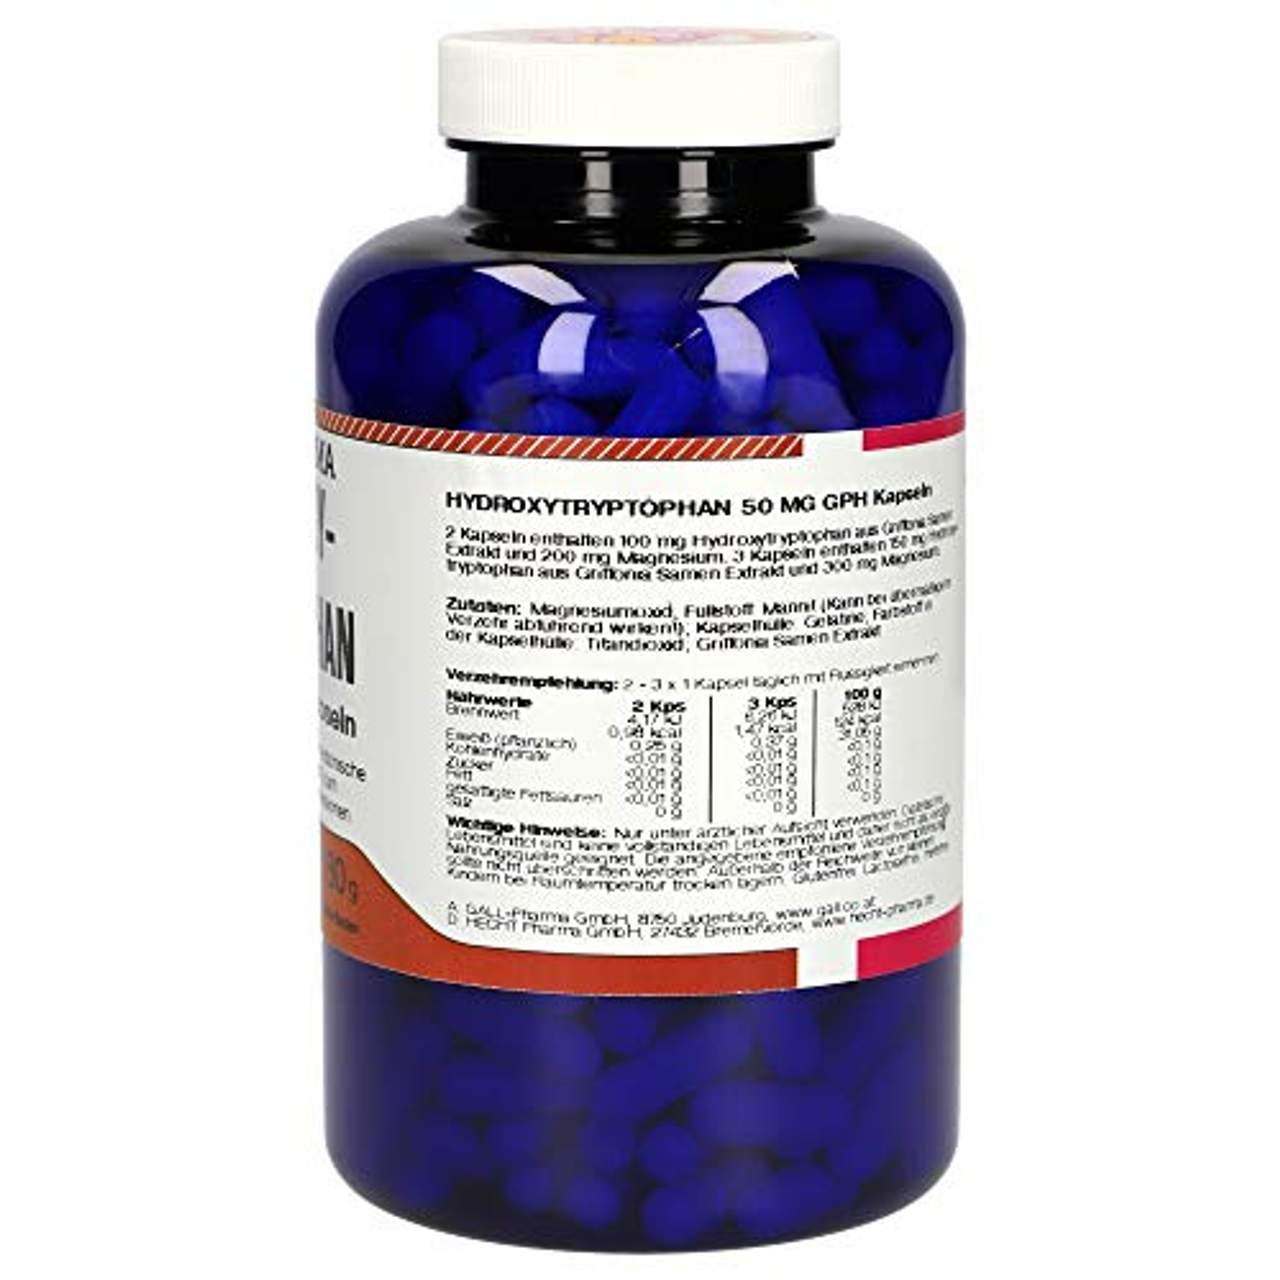 Gall Pharma Hydroxytryptophan 50 mg GPH Kapseln